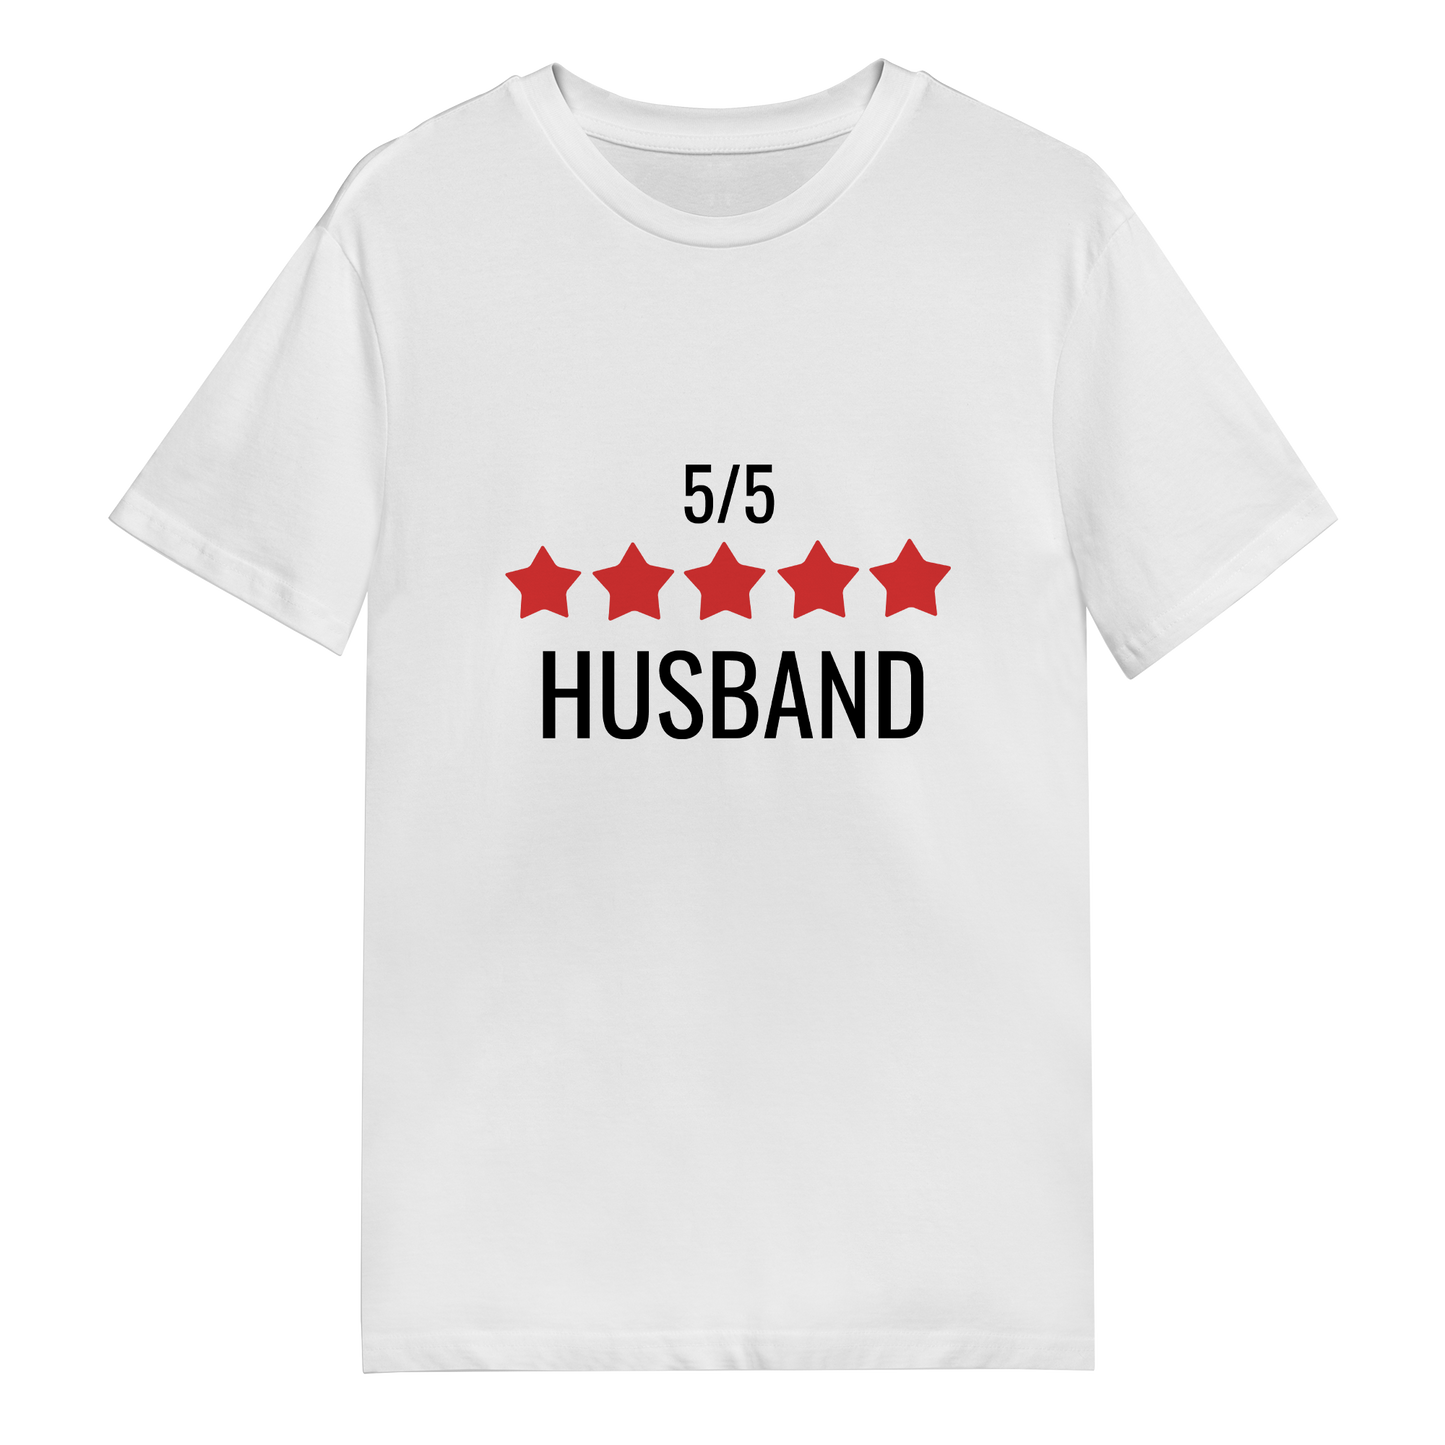 Men's T-Shirt - 5 Star Husband